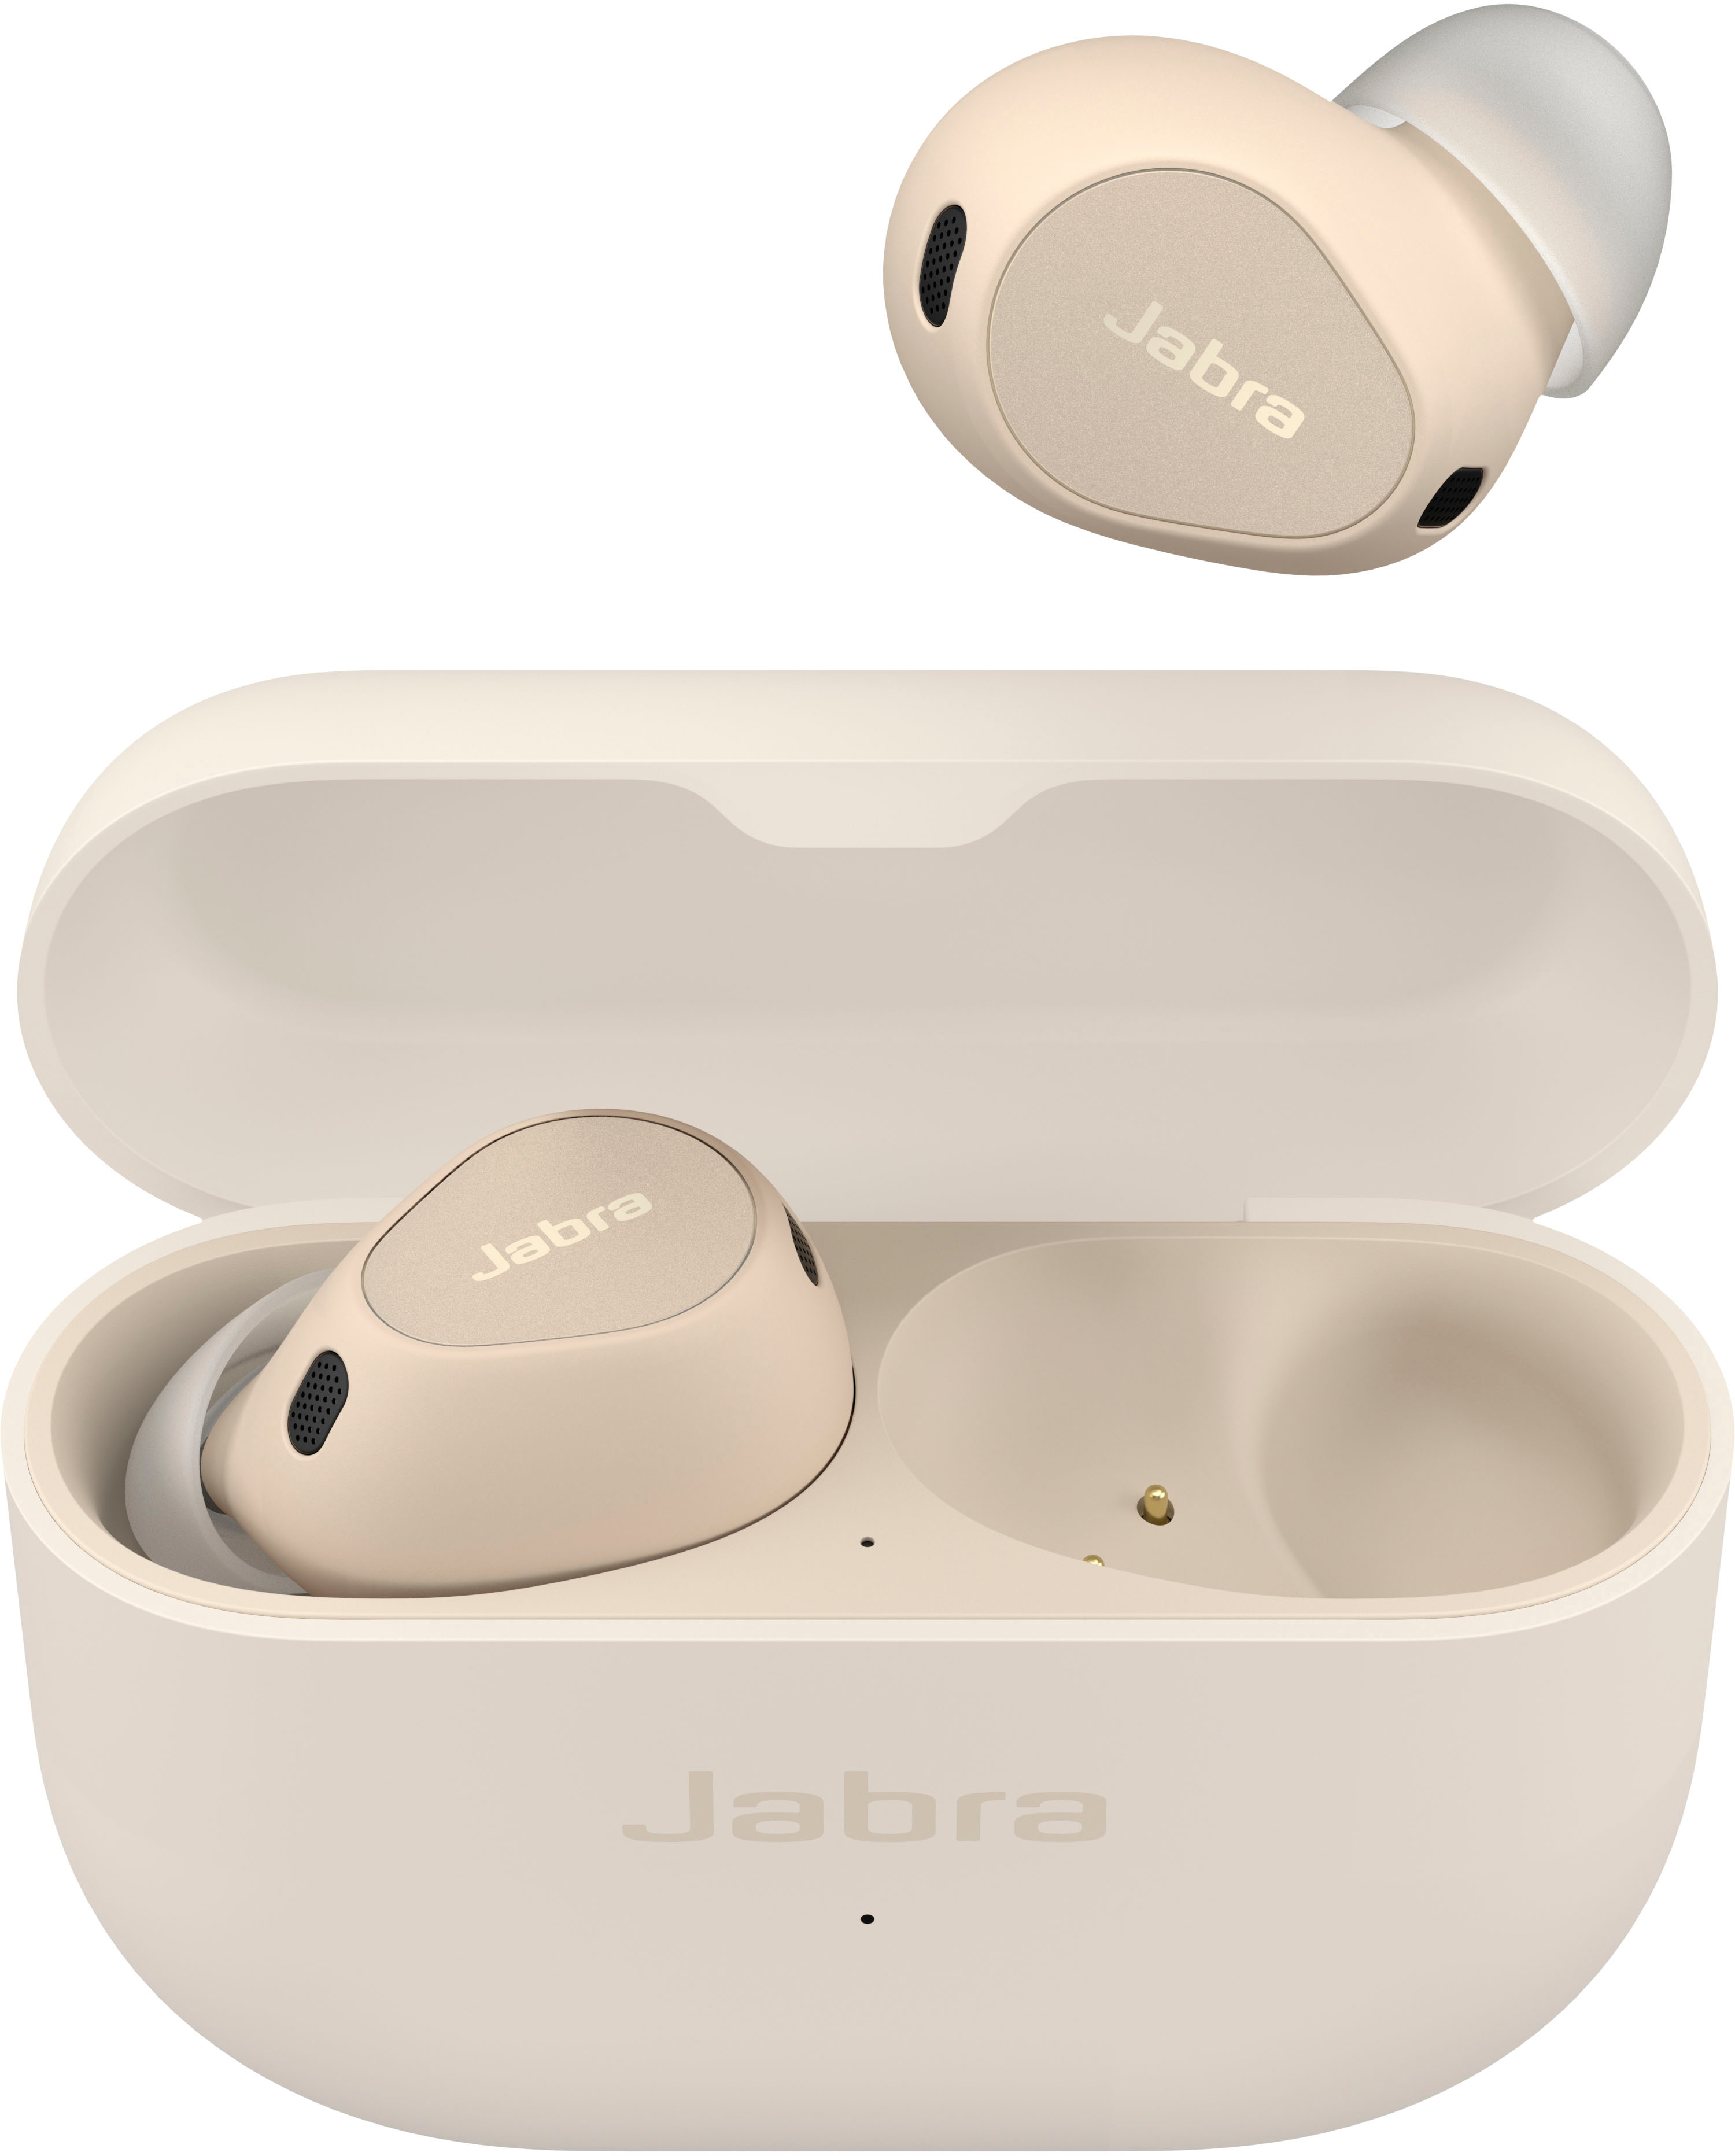 Sweeter-than-sweet discount on the incredible Jabra Elite 10 returns on   - PhoneArena